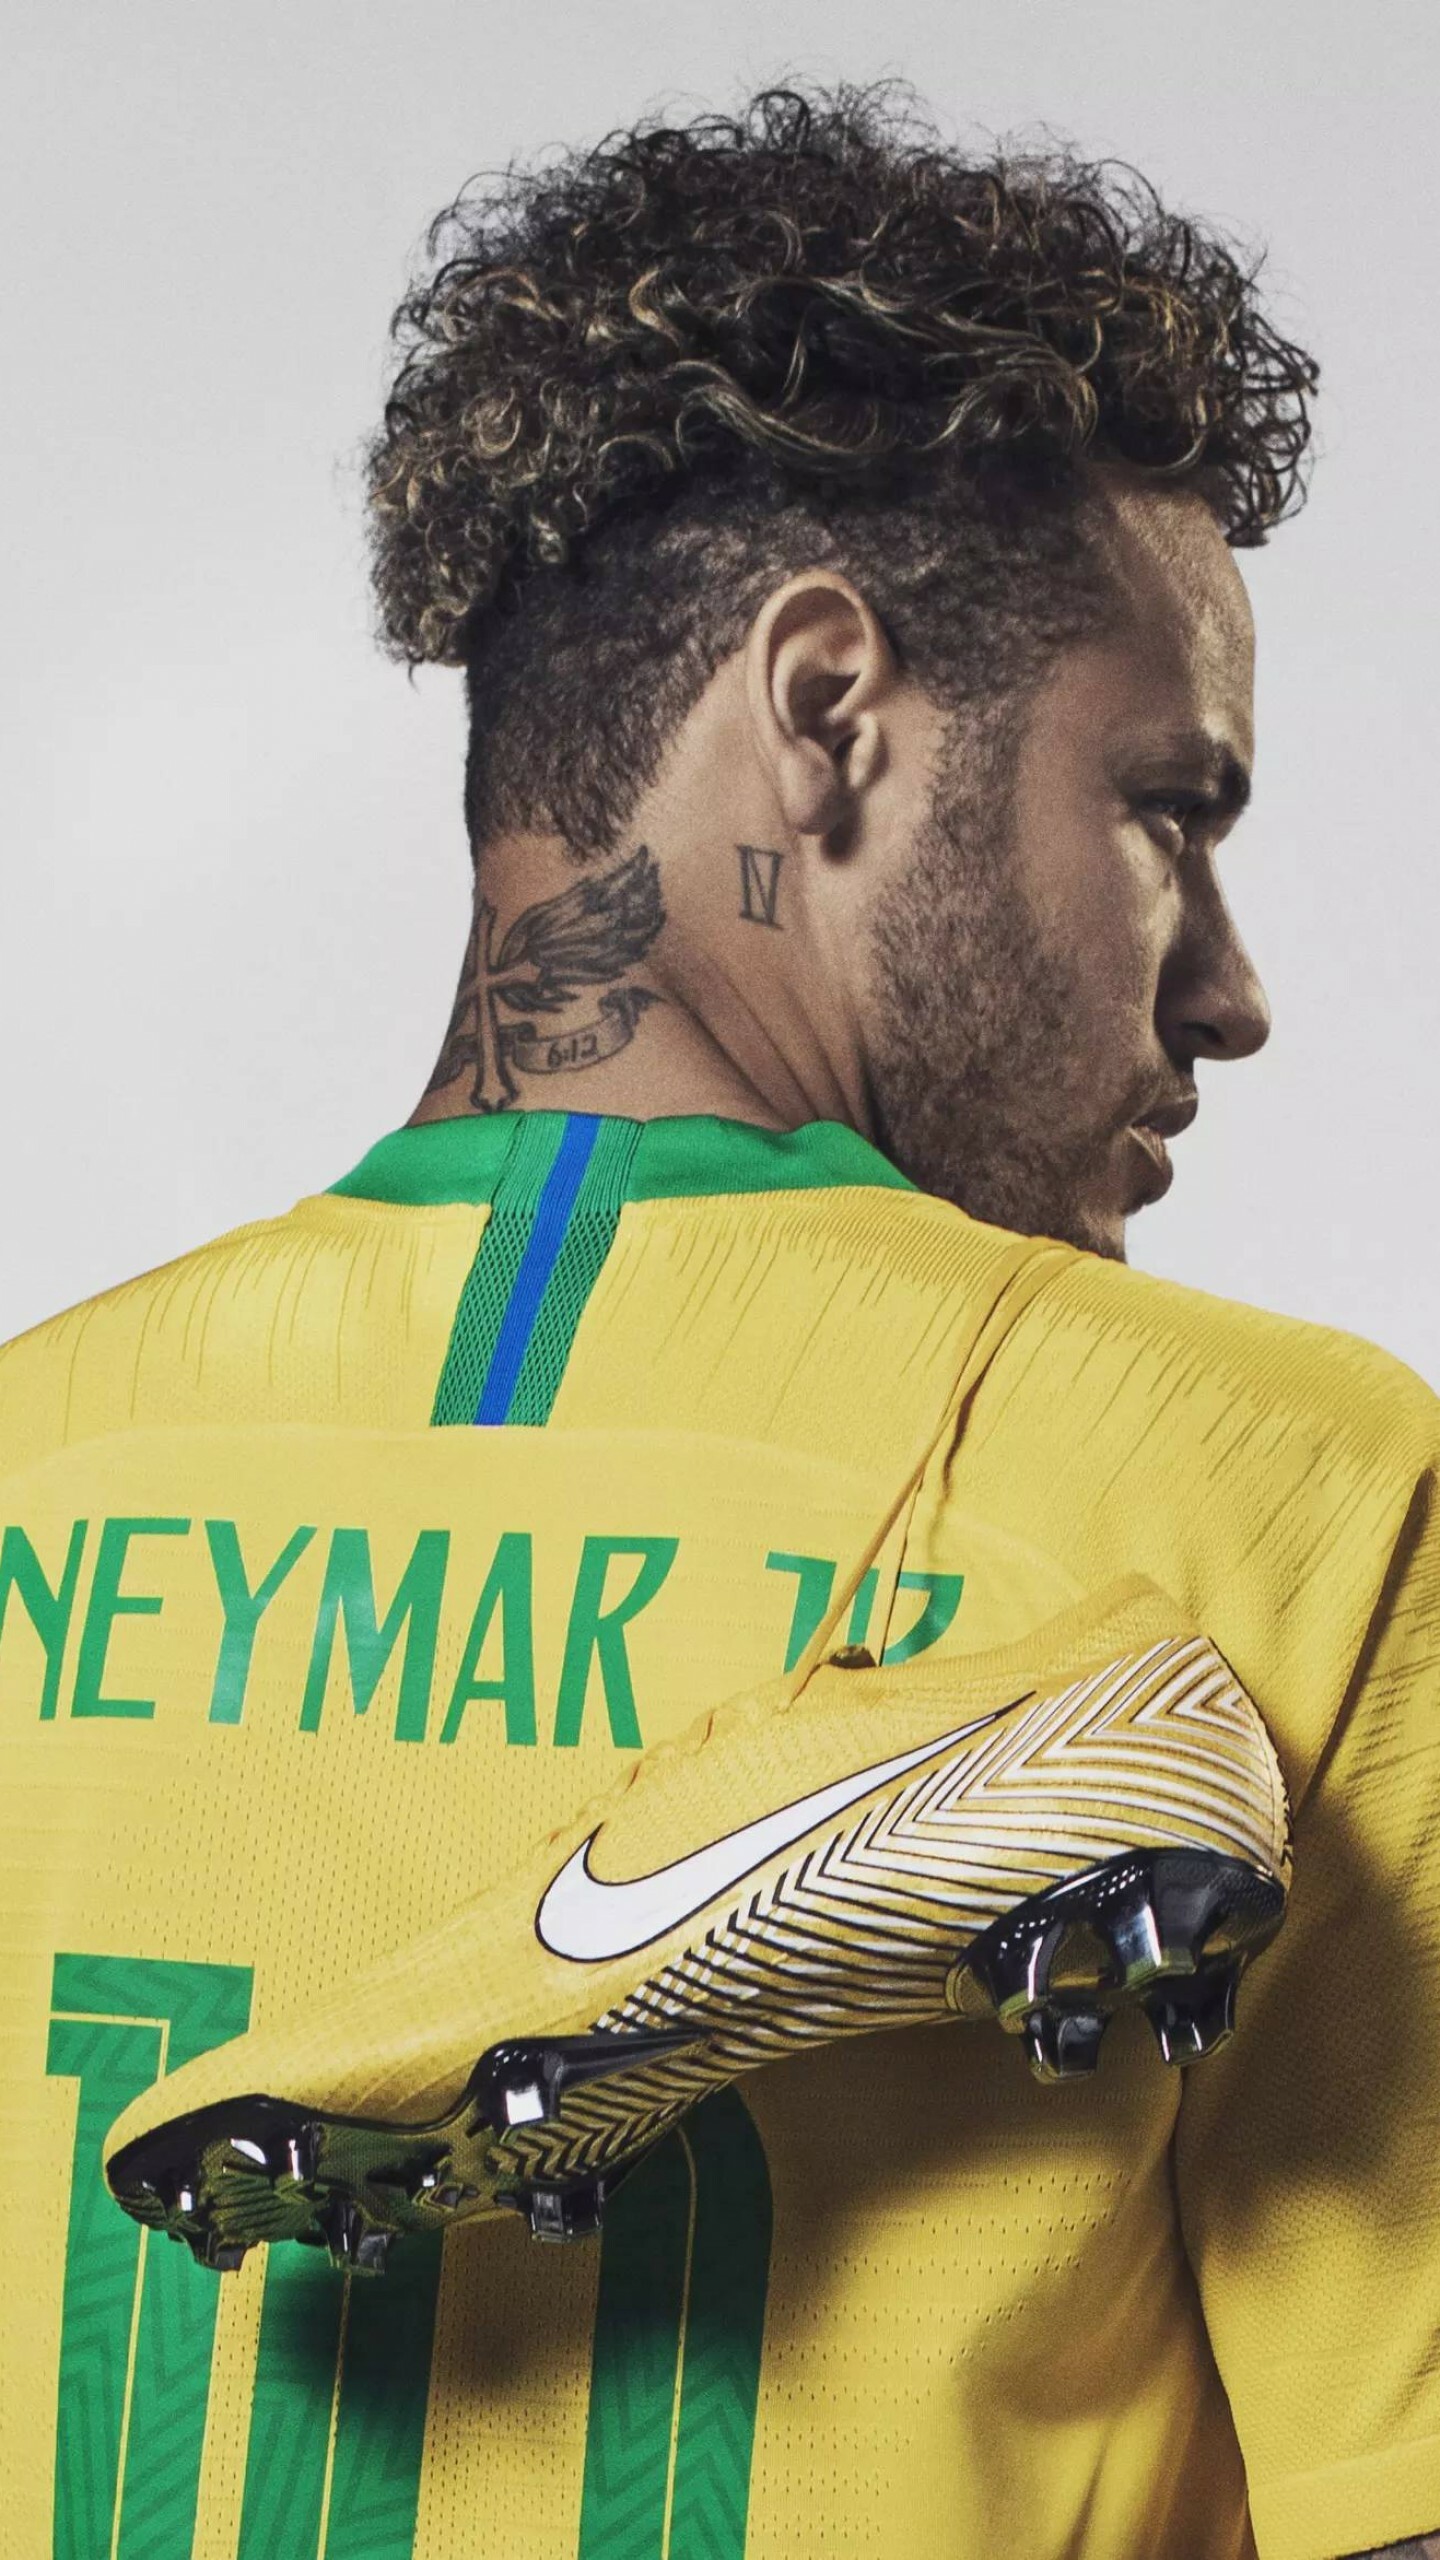 Neymar: He is the joint-top goalscorer for the Brazil national football team alongside Pele. 1440x2560 HD Wallpaper.